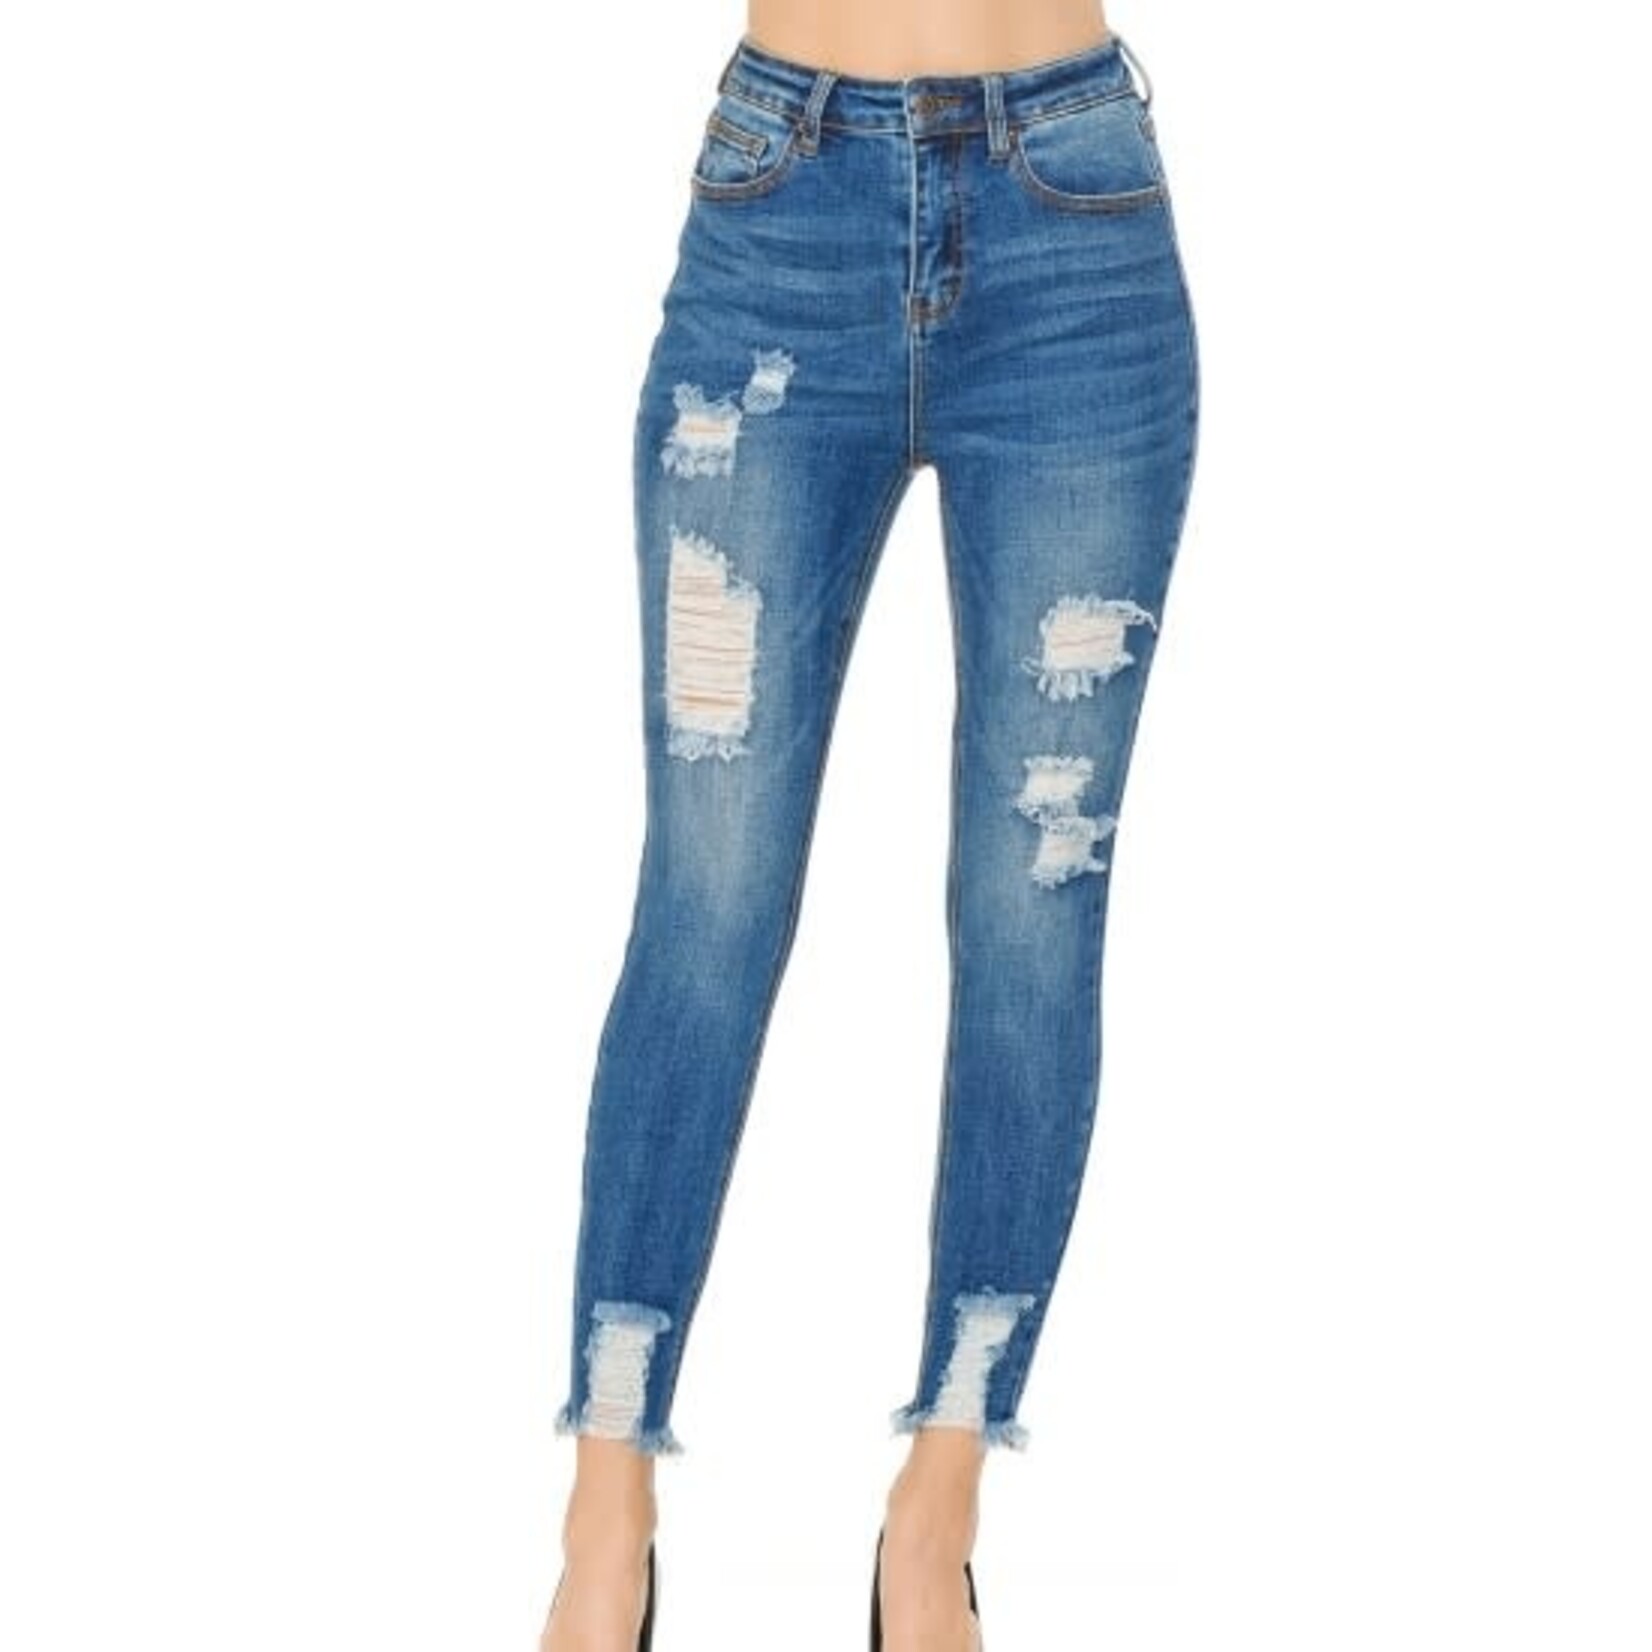 Wax Jeans WAX JEANS WOMEN HIGH-RISE SKINNY JEANS STYLE  90188